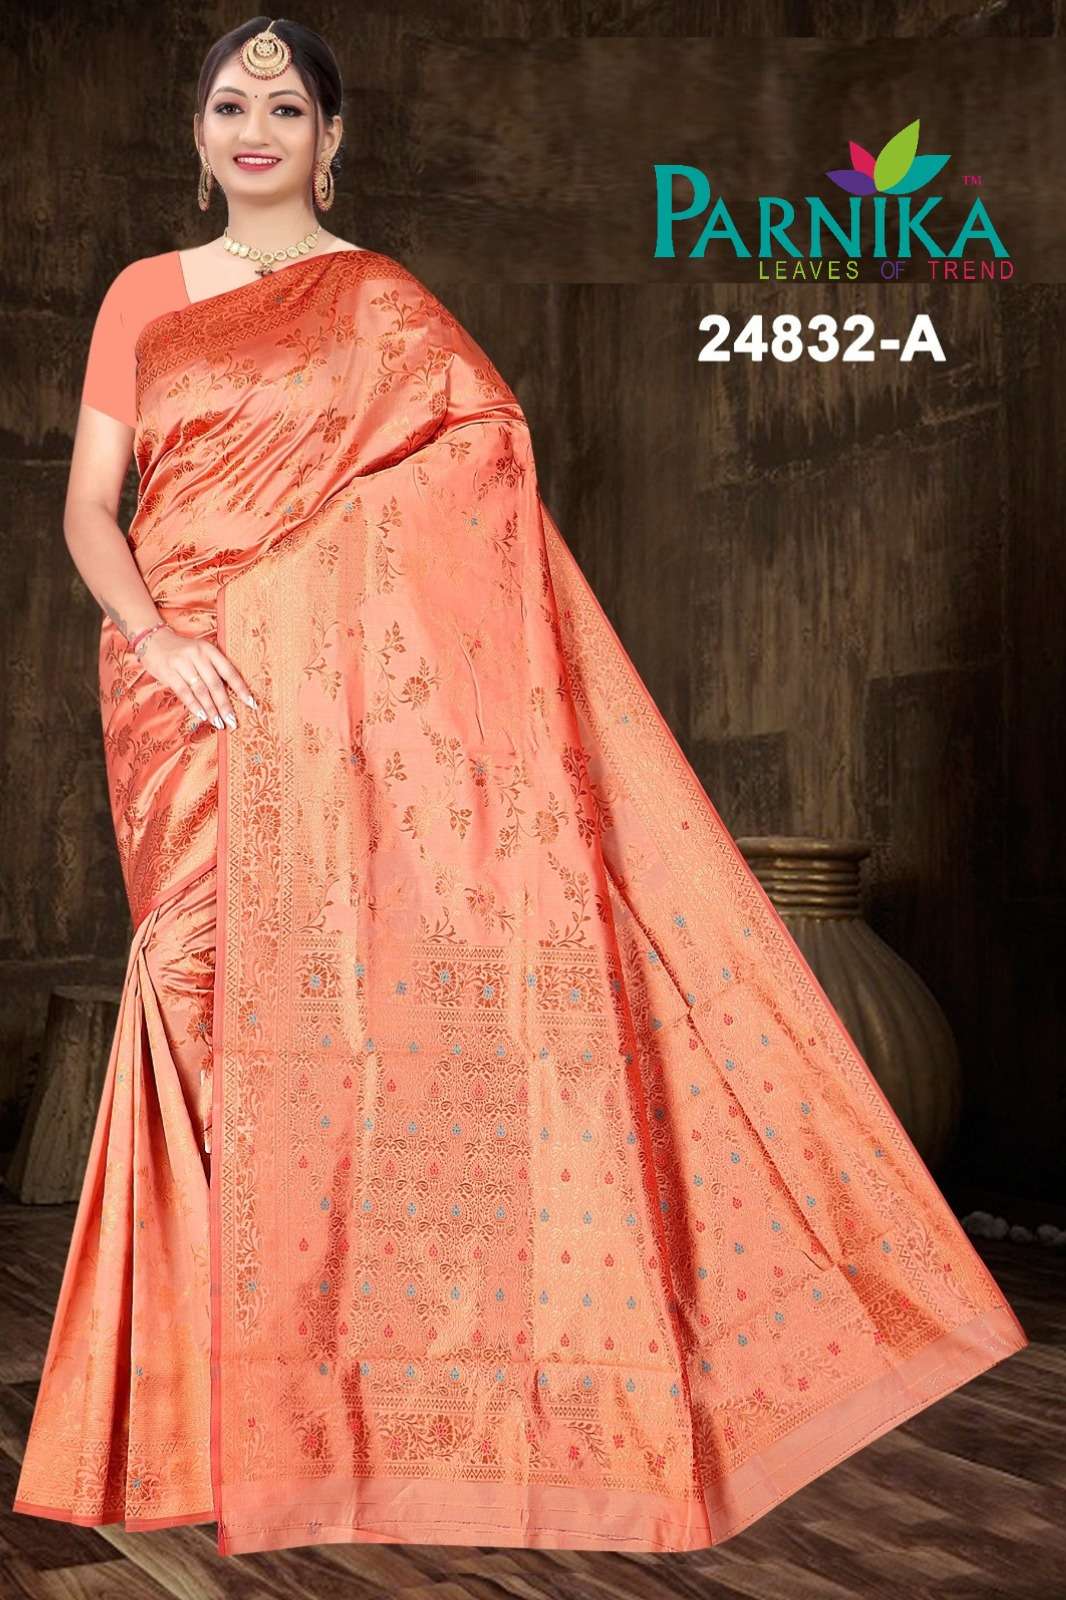 Parnika India Lichi Silk Jacquard Sarees Festive Wear Wedding Saree in Wholesale rate - 24832